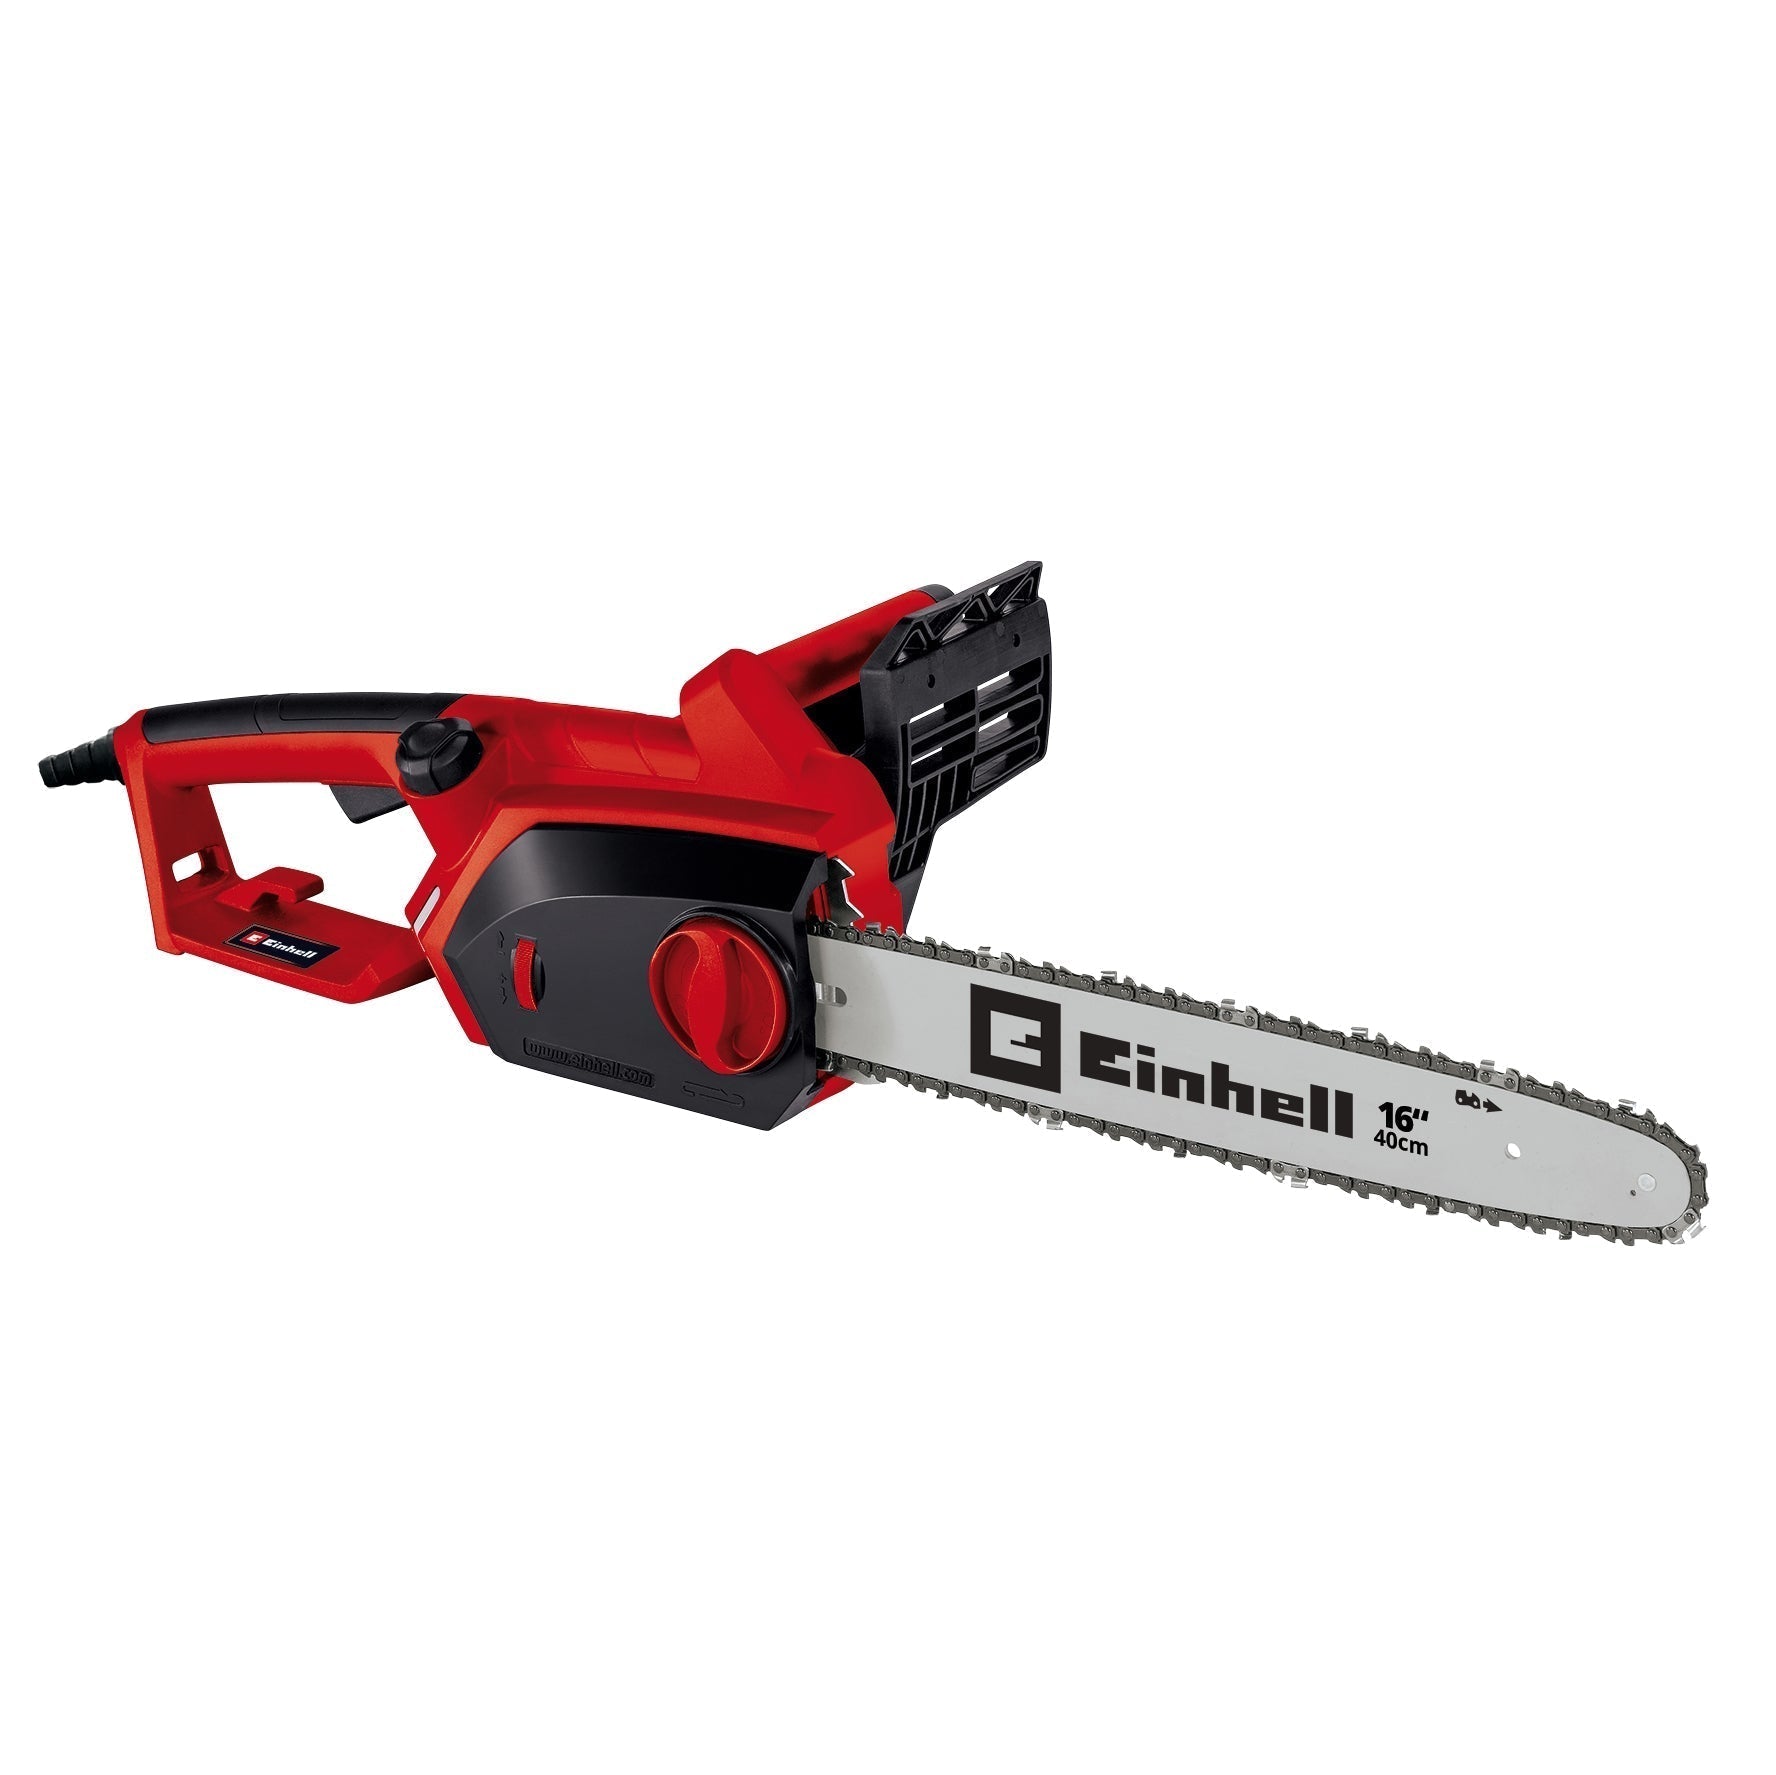 Einhell GH-EC 2040 Electric Chainsaw 2000w - Premium Chainsaws from Einhell - Just $90! Shop now at W Hurst & Son (IW) Ltd